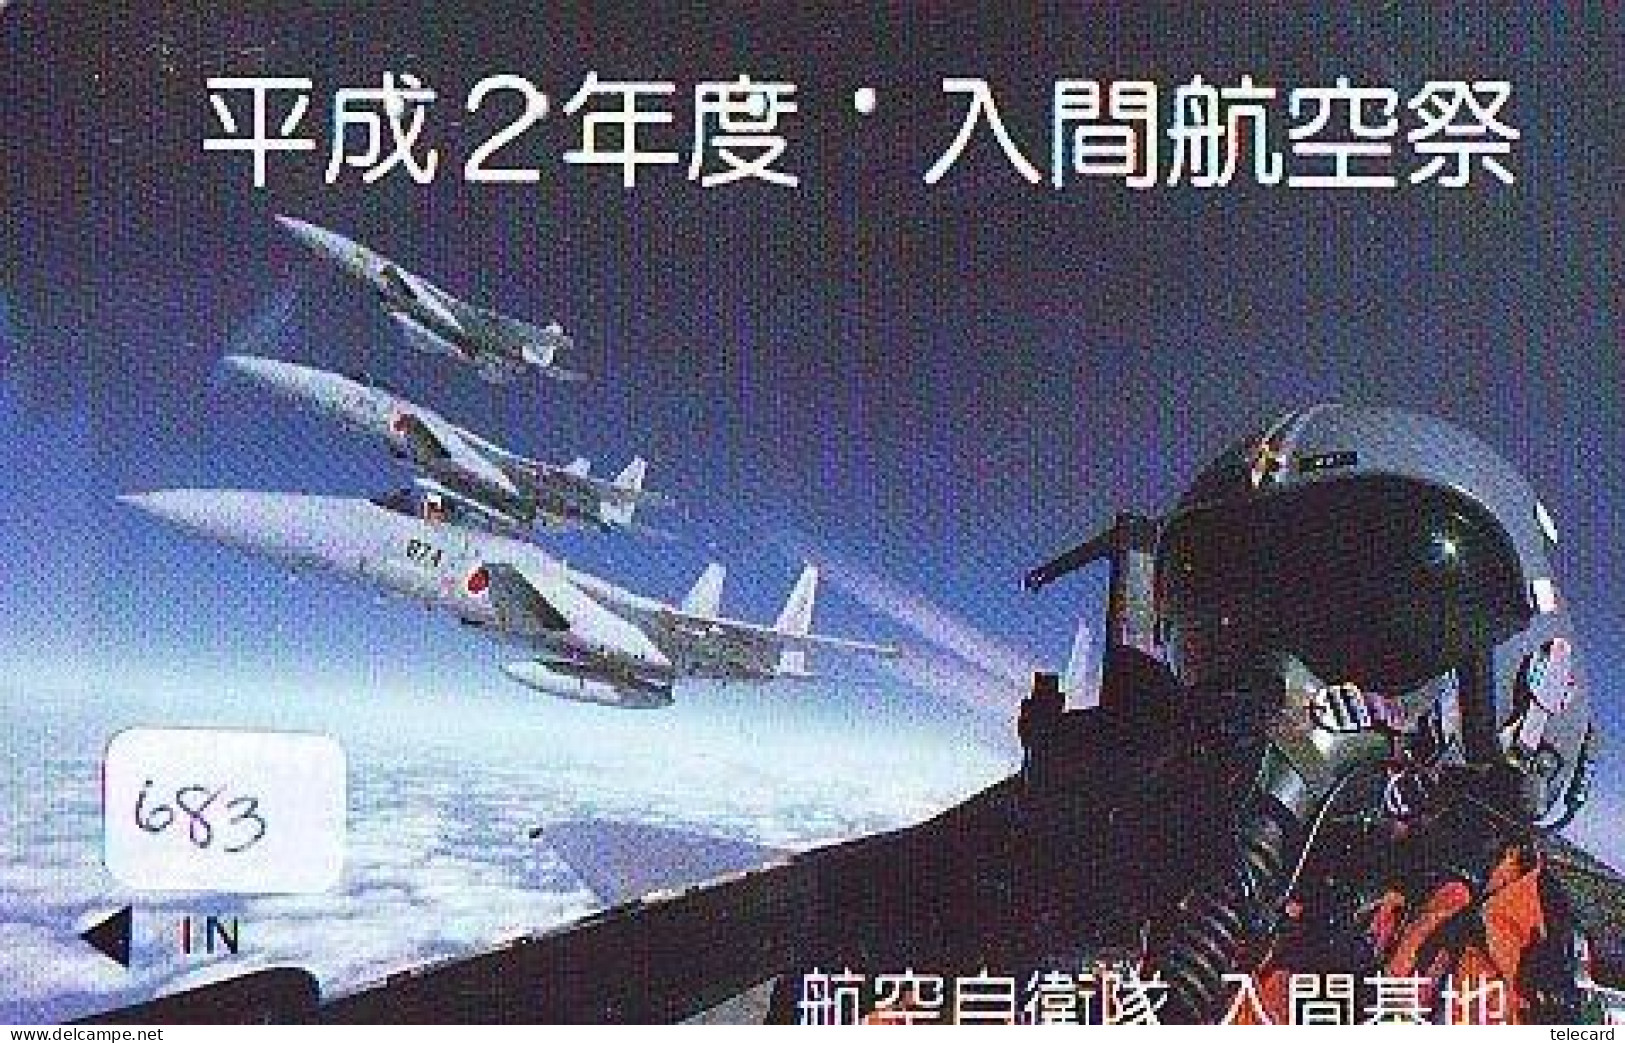 TELECARTE JAPON * MILITAIRY AVION  (683)  Flugzeuge * Airplane * Aeroplano * PHONECARD JAPAN * ARMEE * LEGER VLIEGTUIG - Armée